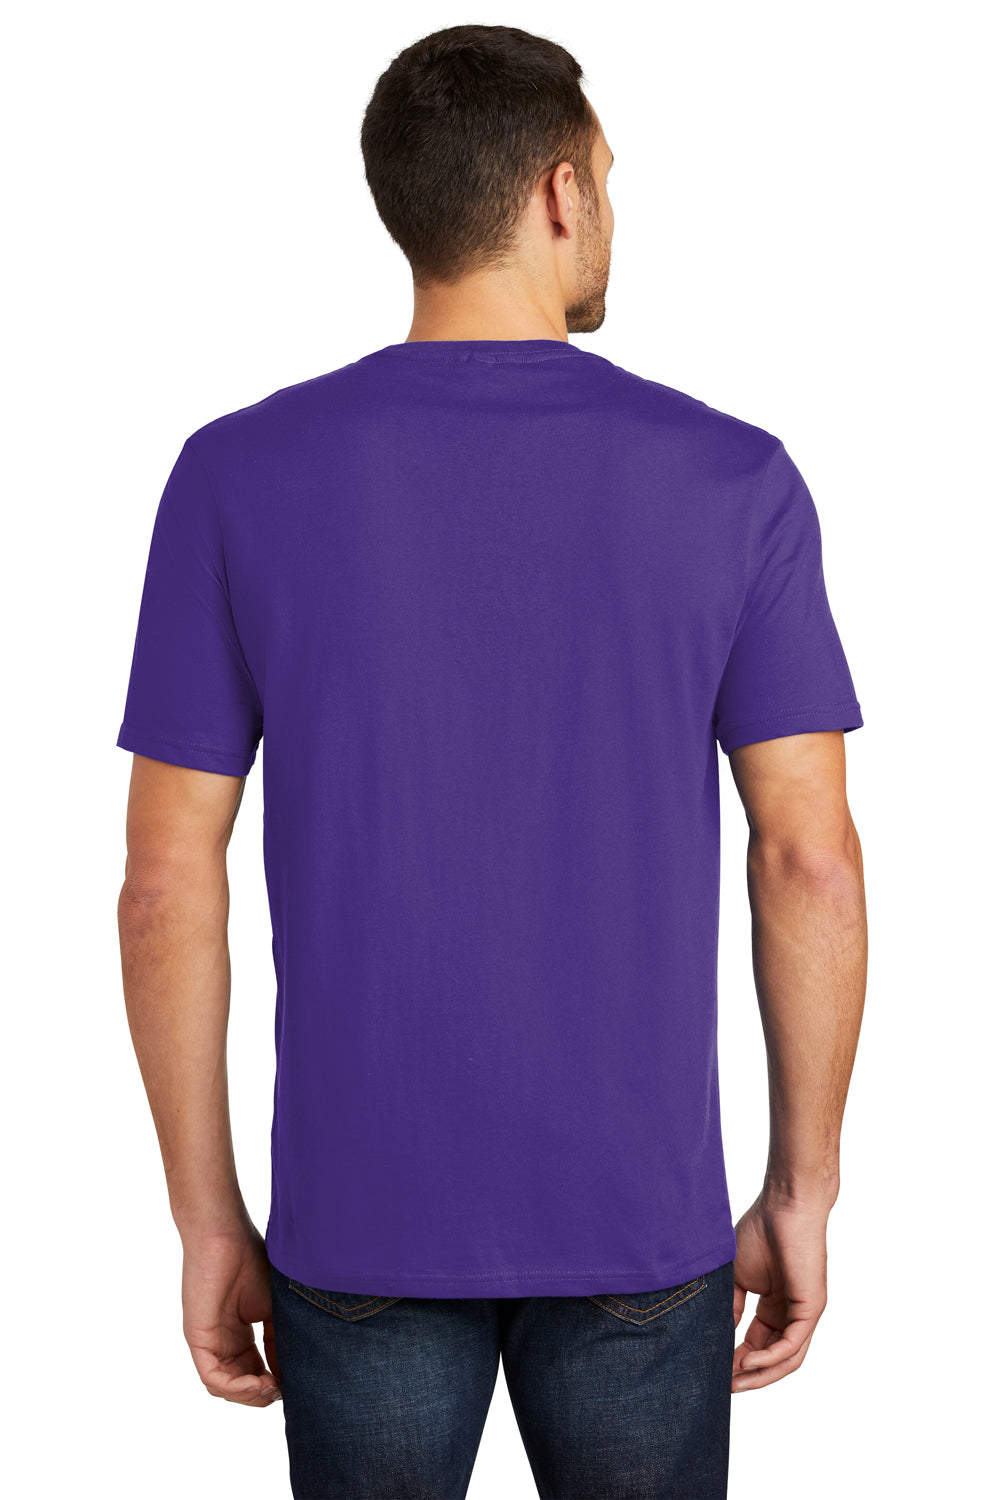 District DT104 Mens Perfect Weight Short Sleeve Crewneck T-Shirt Purple Back